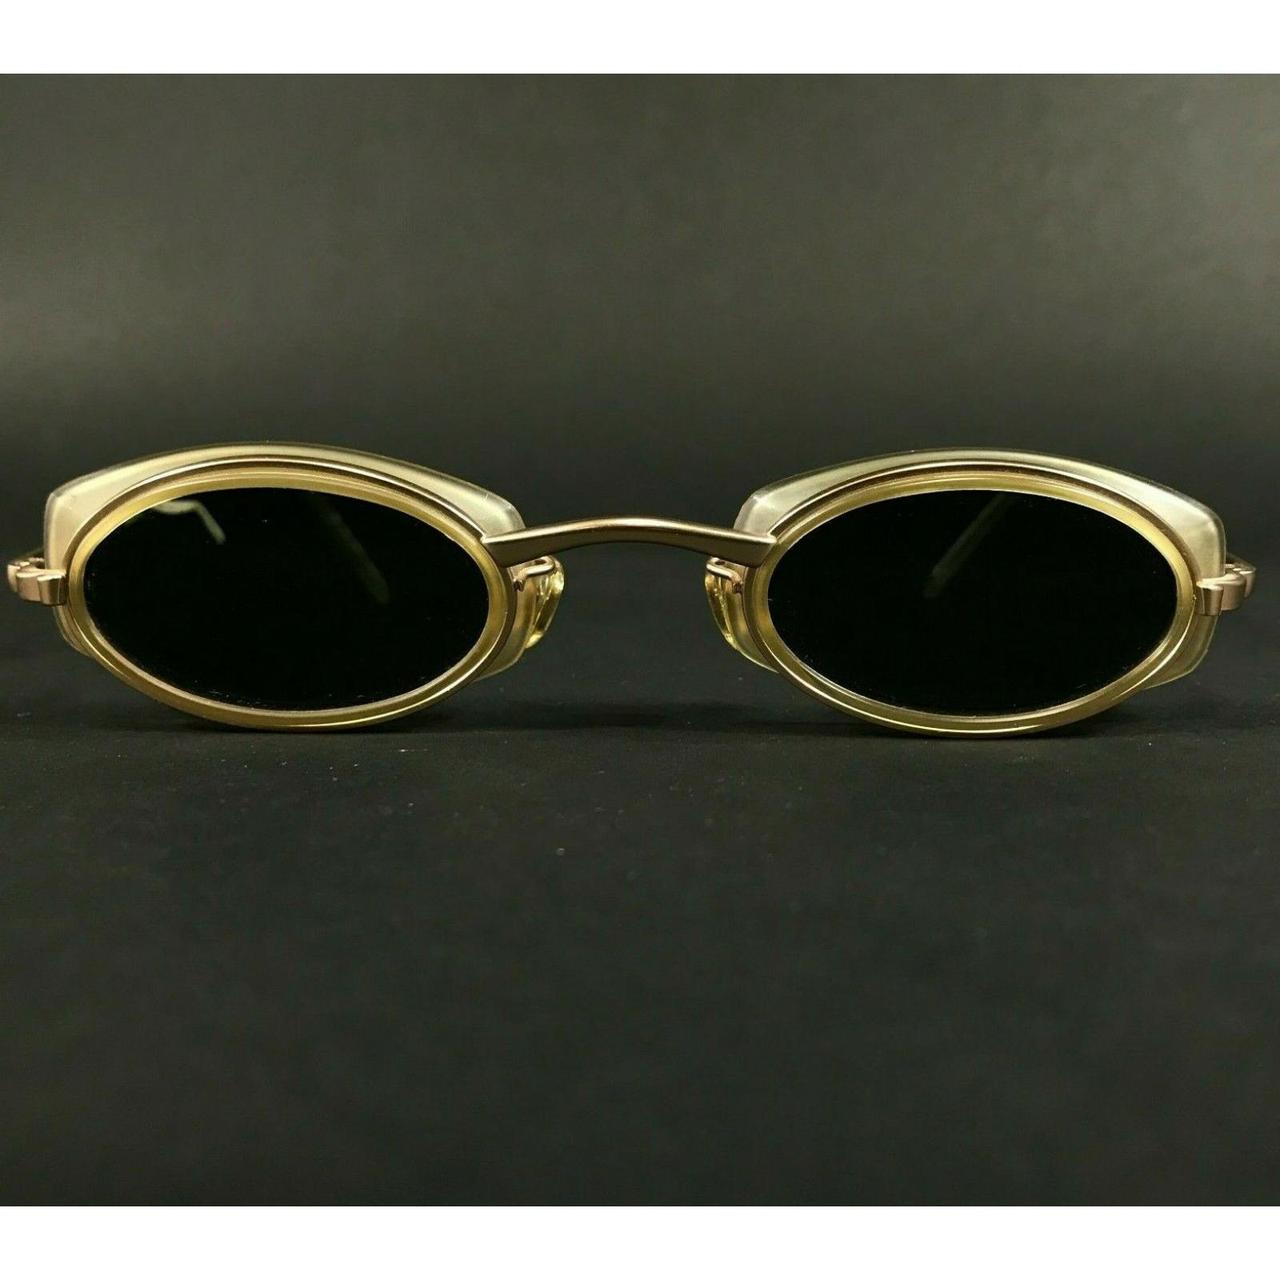 Eschenbach Sunglasses Gold Round Side Shields Frames... - Depop